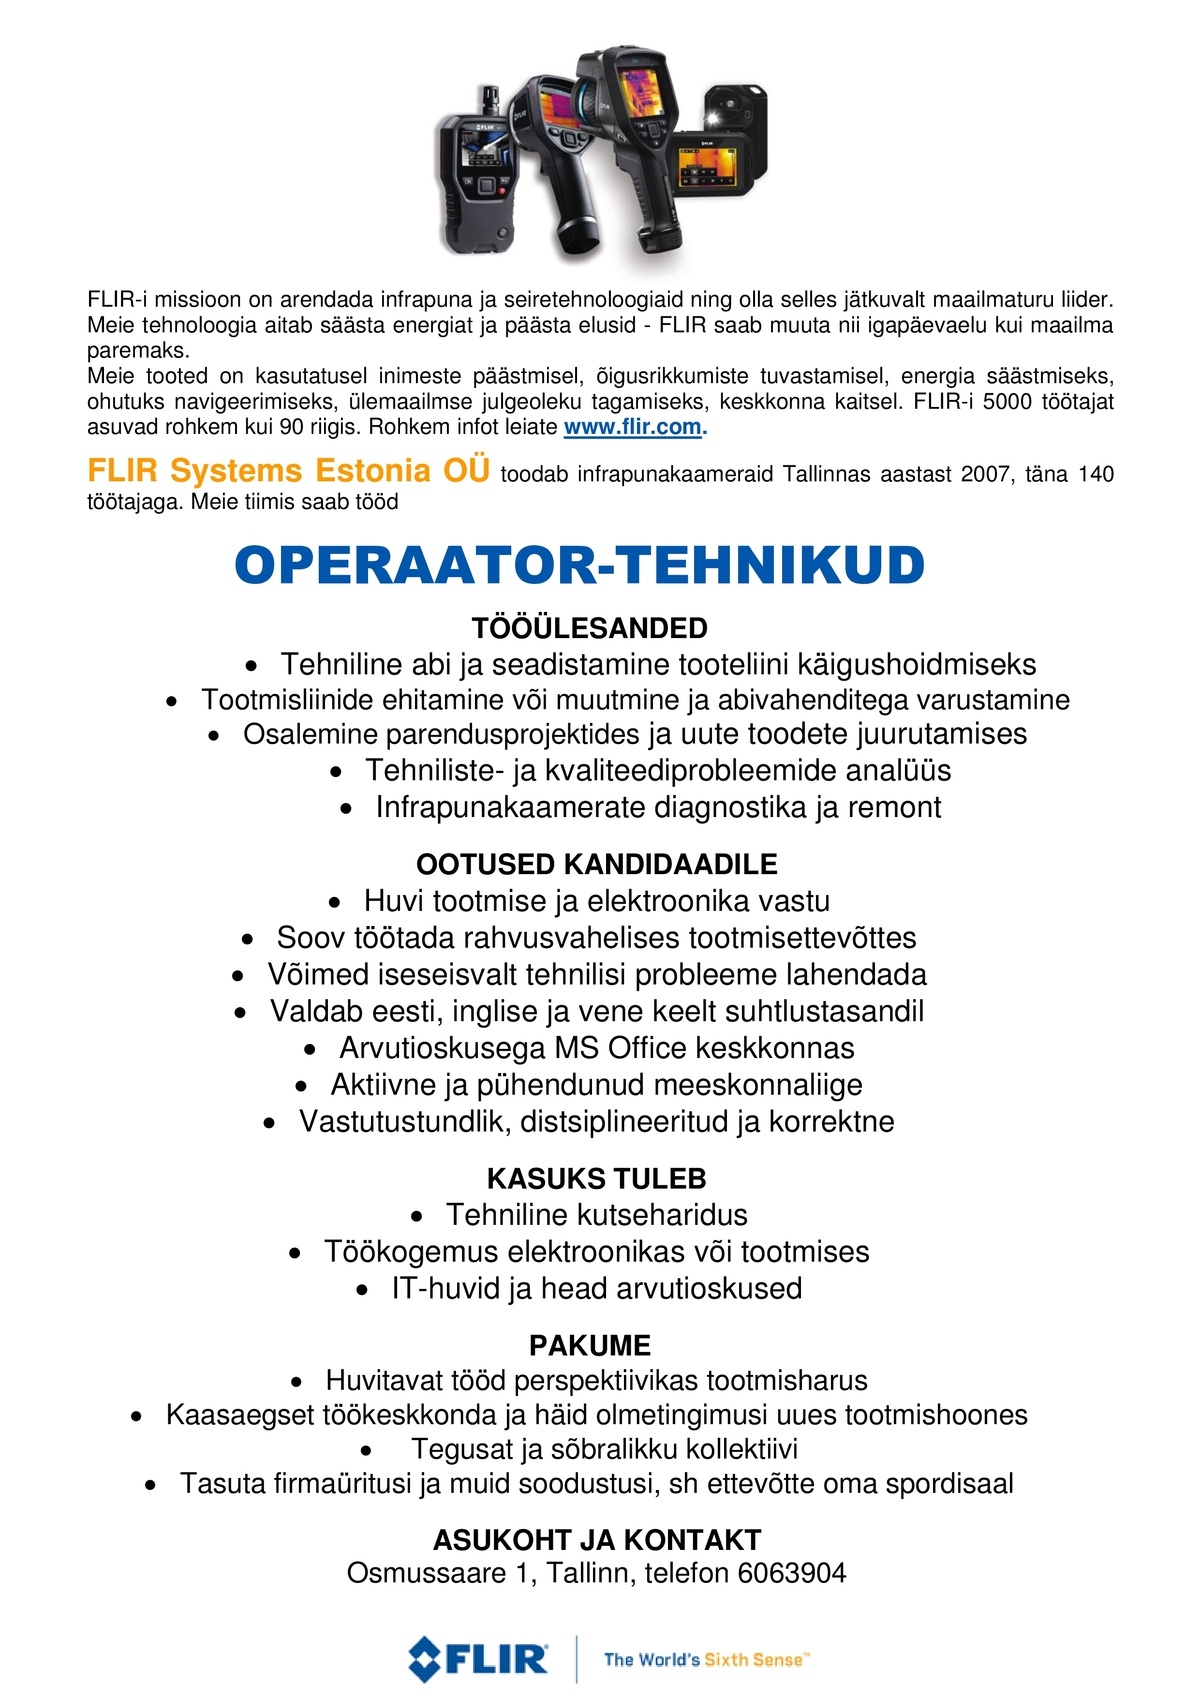 FLIR Systems Estonia OÜ Operaator-tehnik